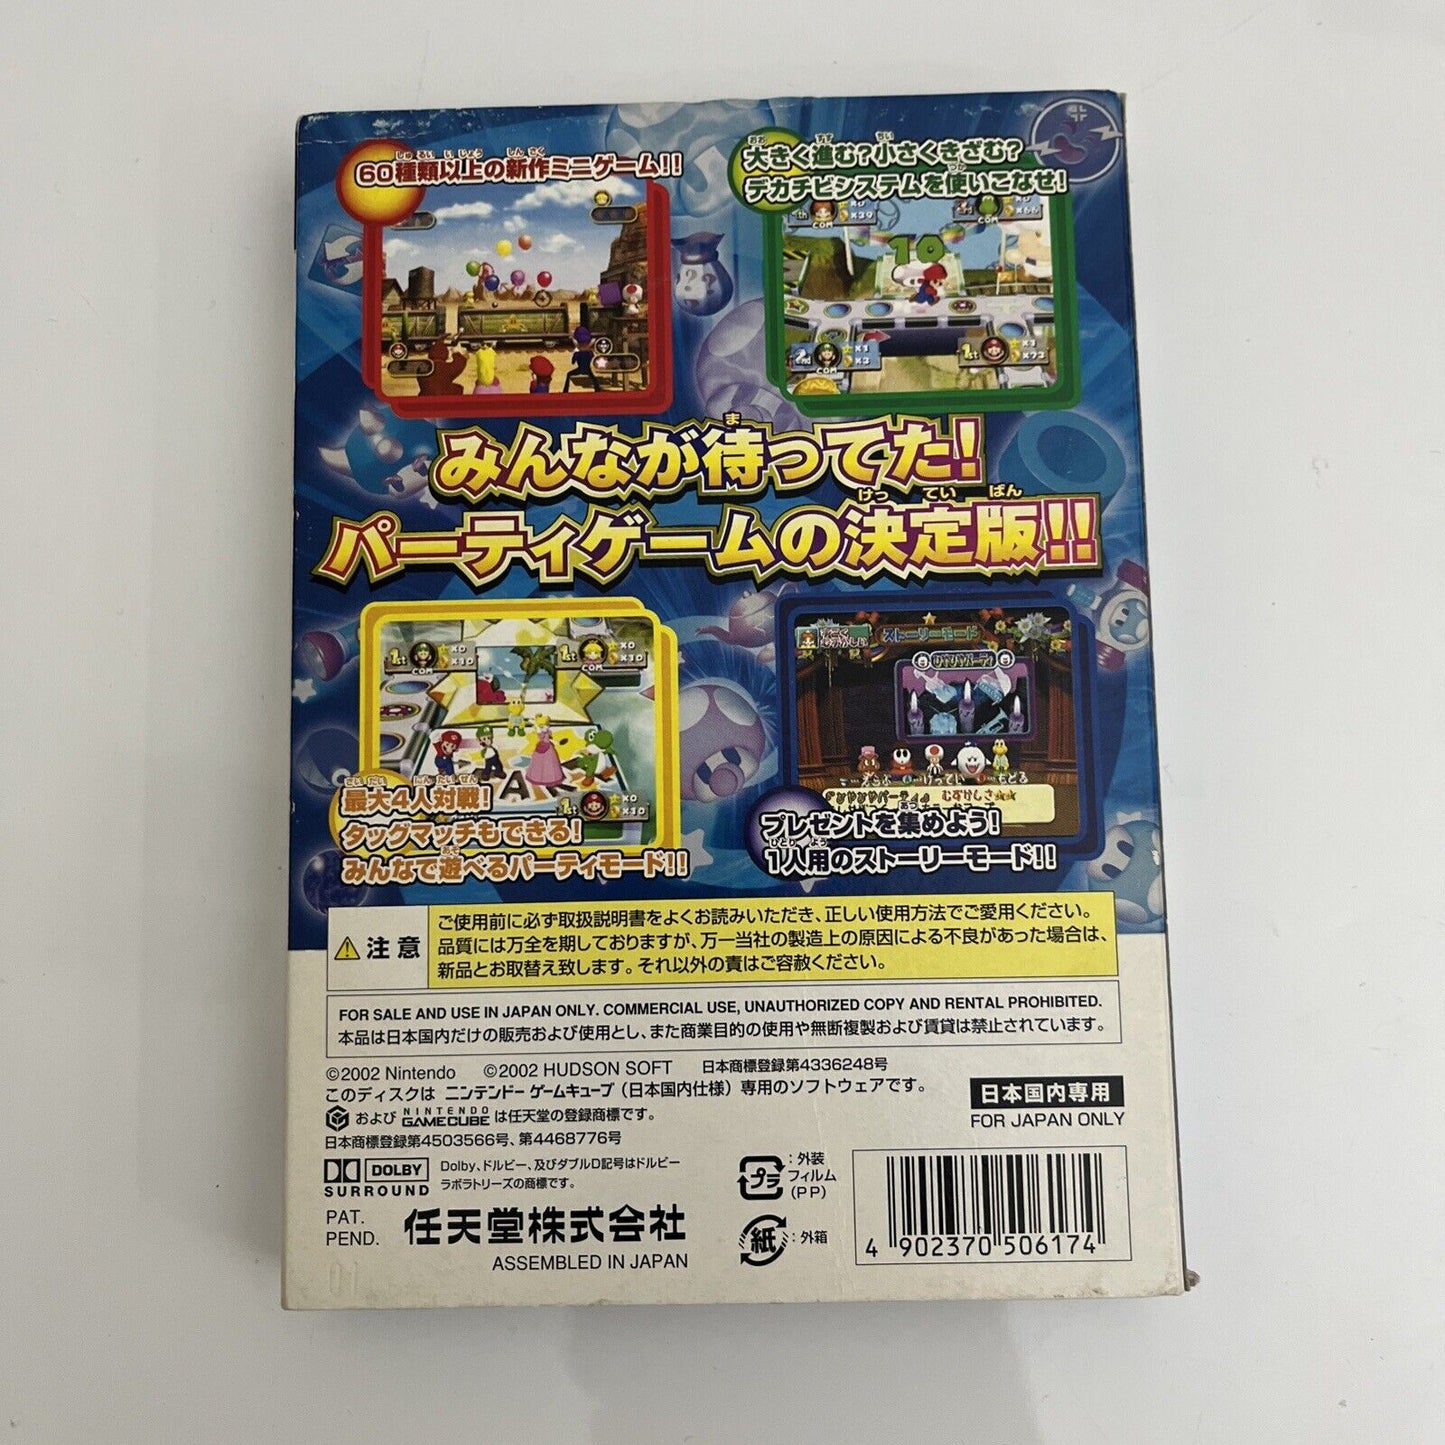 Mario Party 4 - Nintendo GameCube NTSC-J JAPAN GC Game Complete